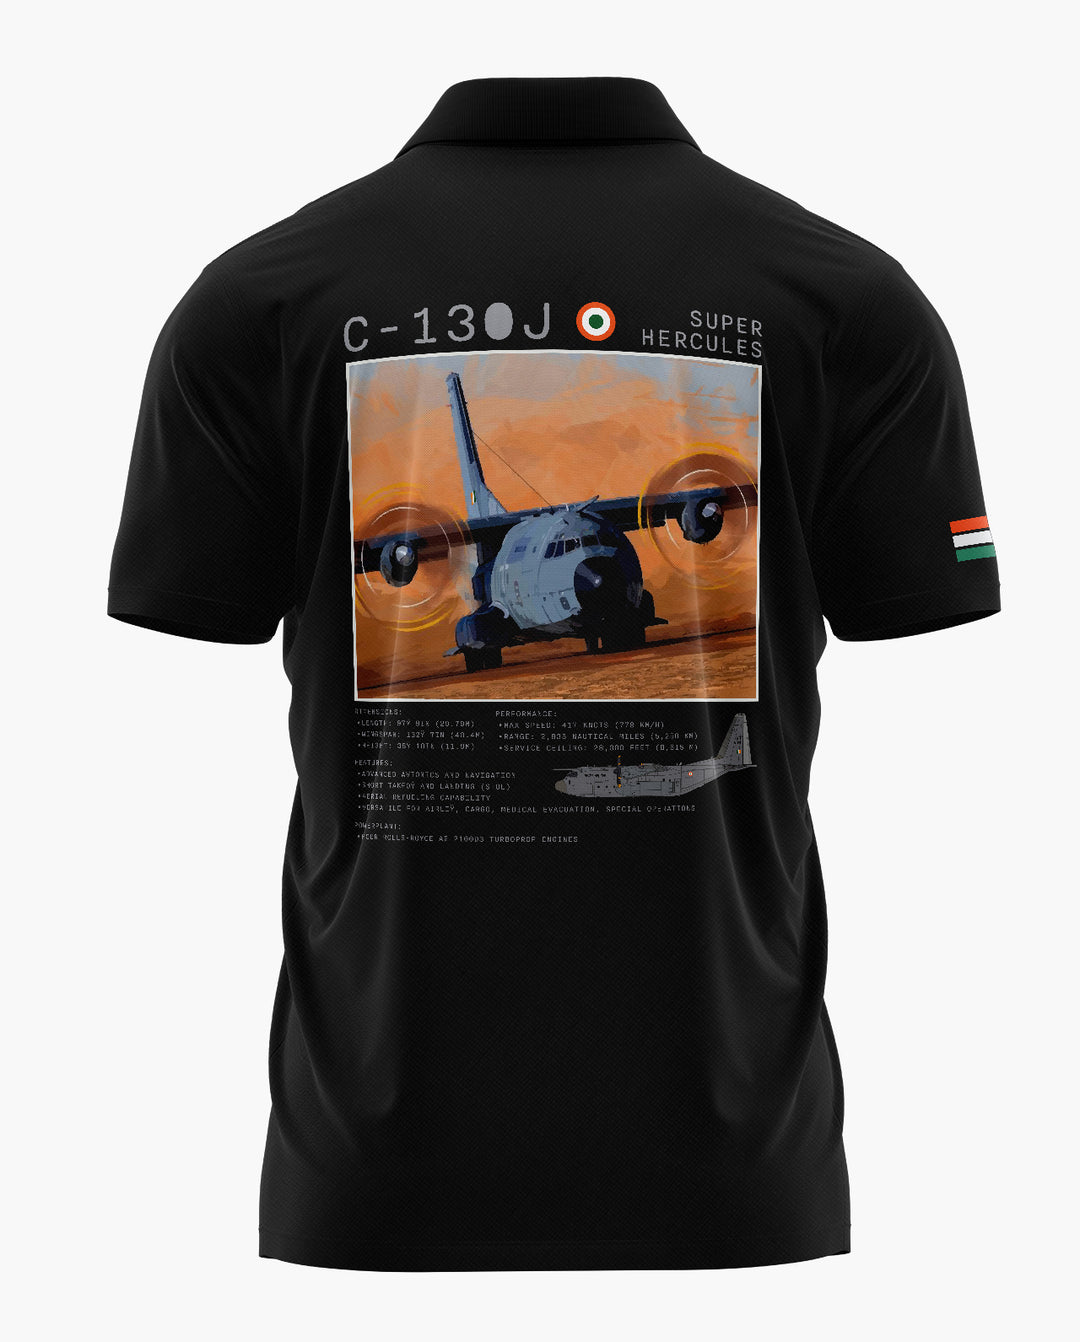 C130J SUPER HERCULES Polo T-shirt